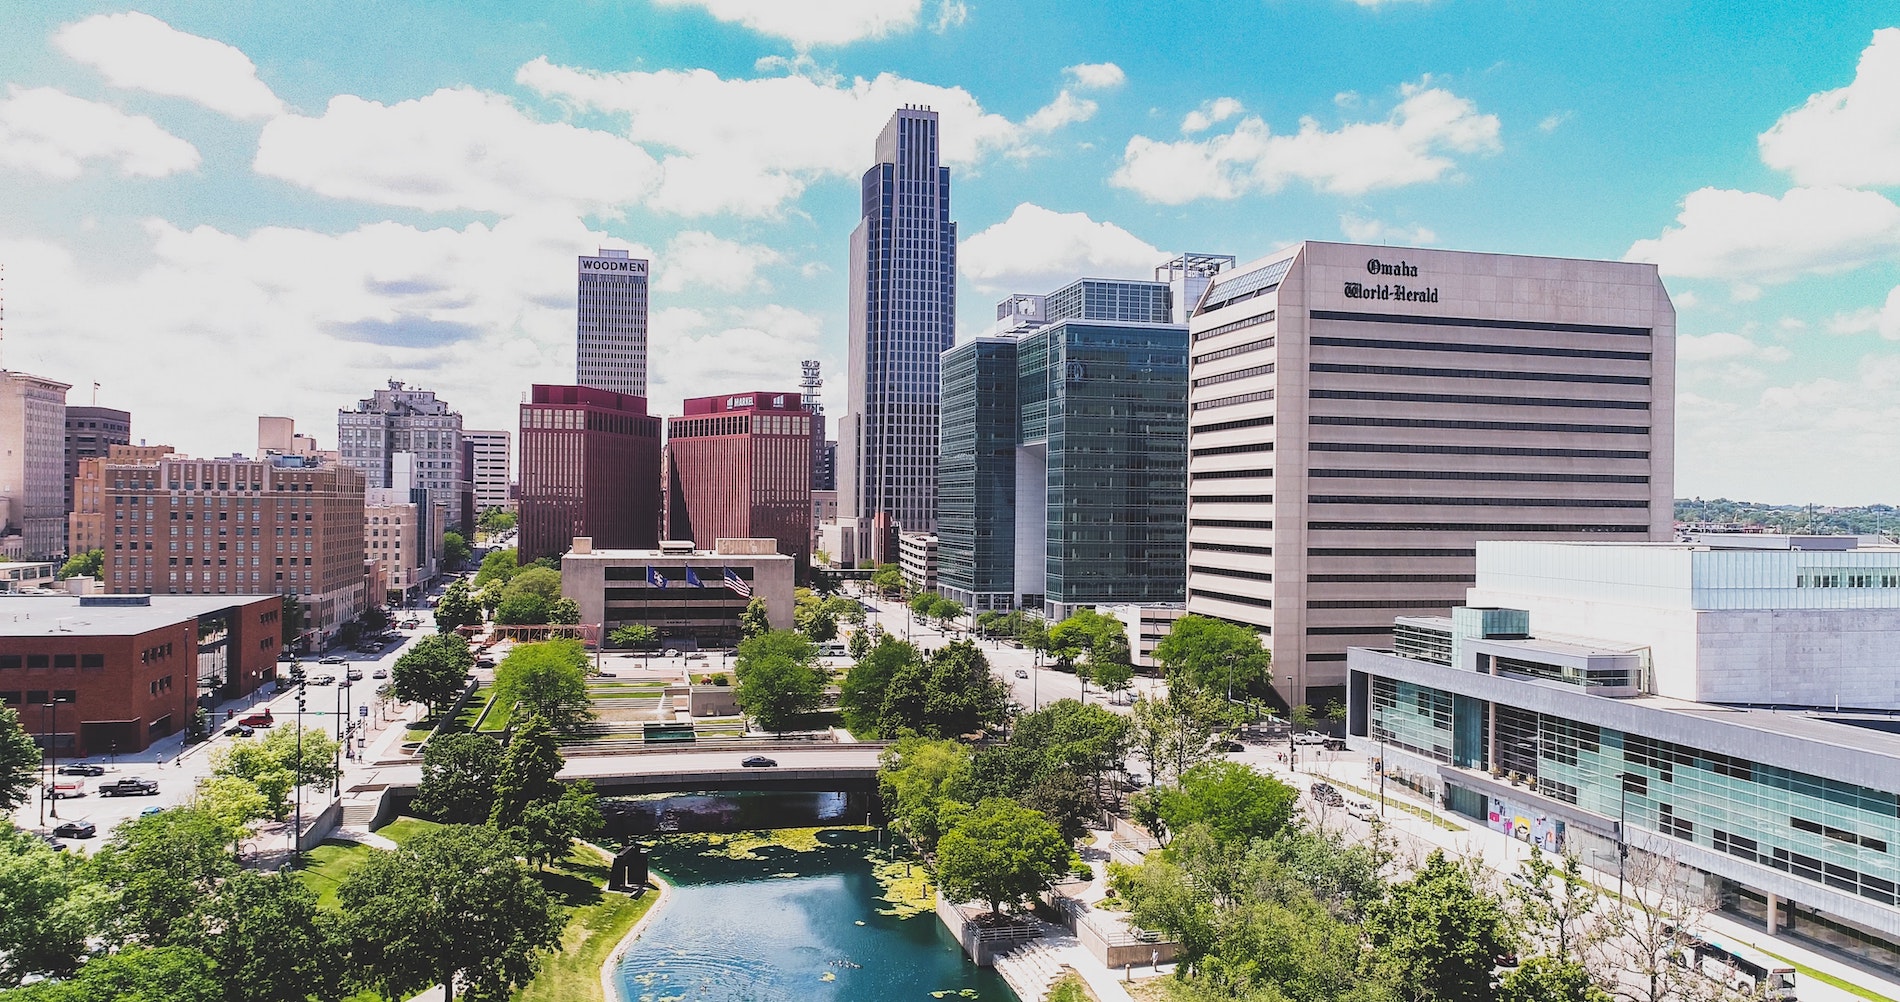 Omaha, Nebraska skyline